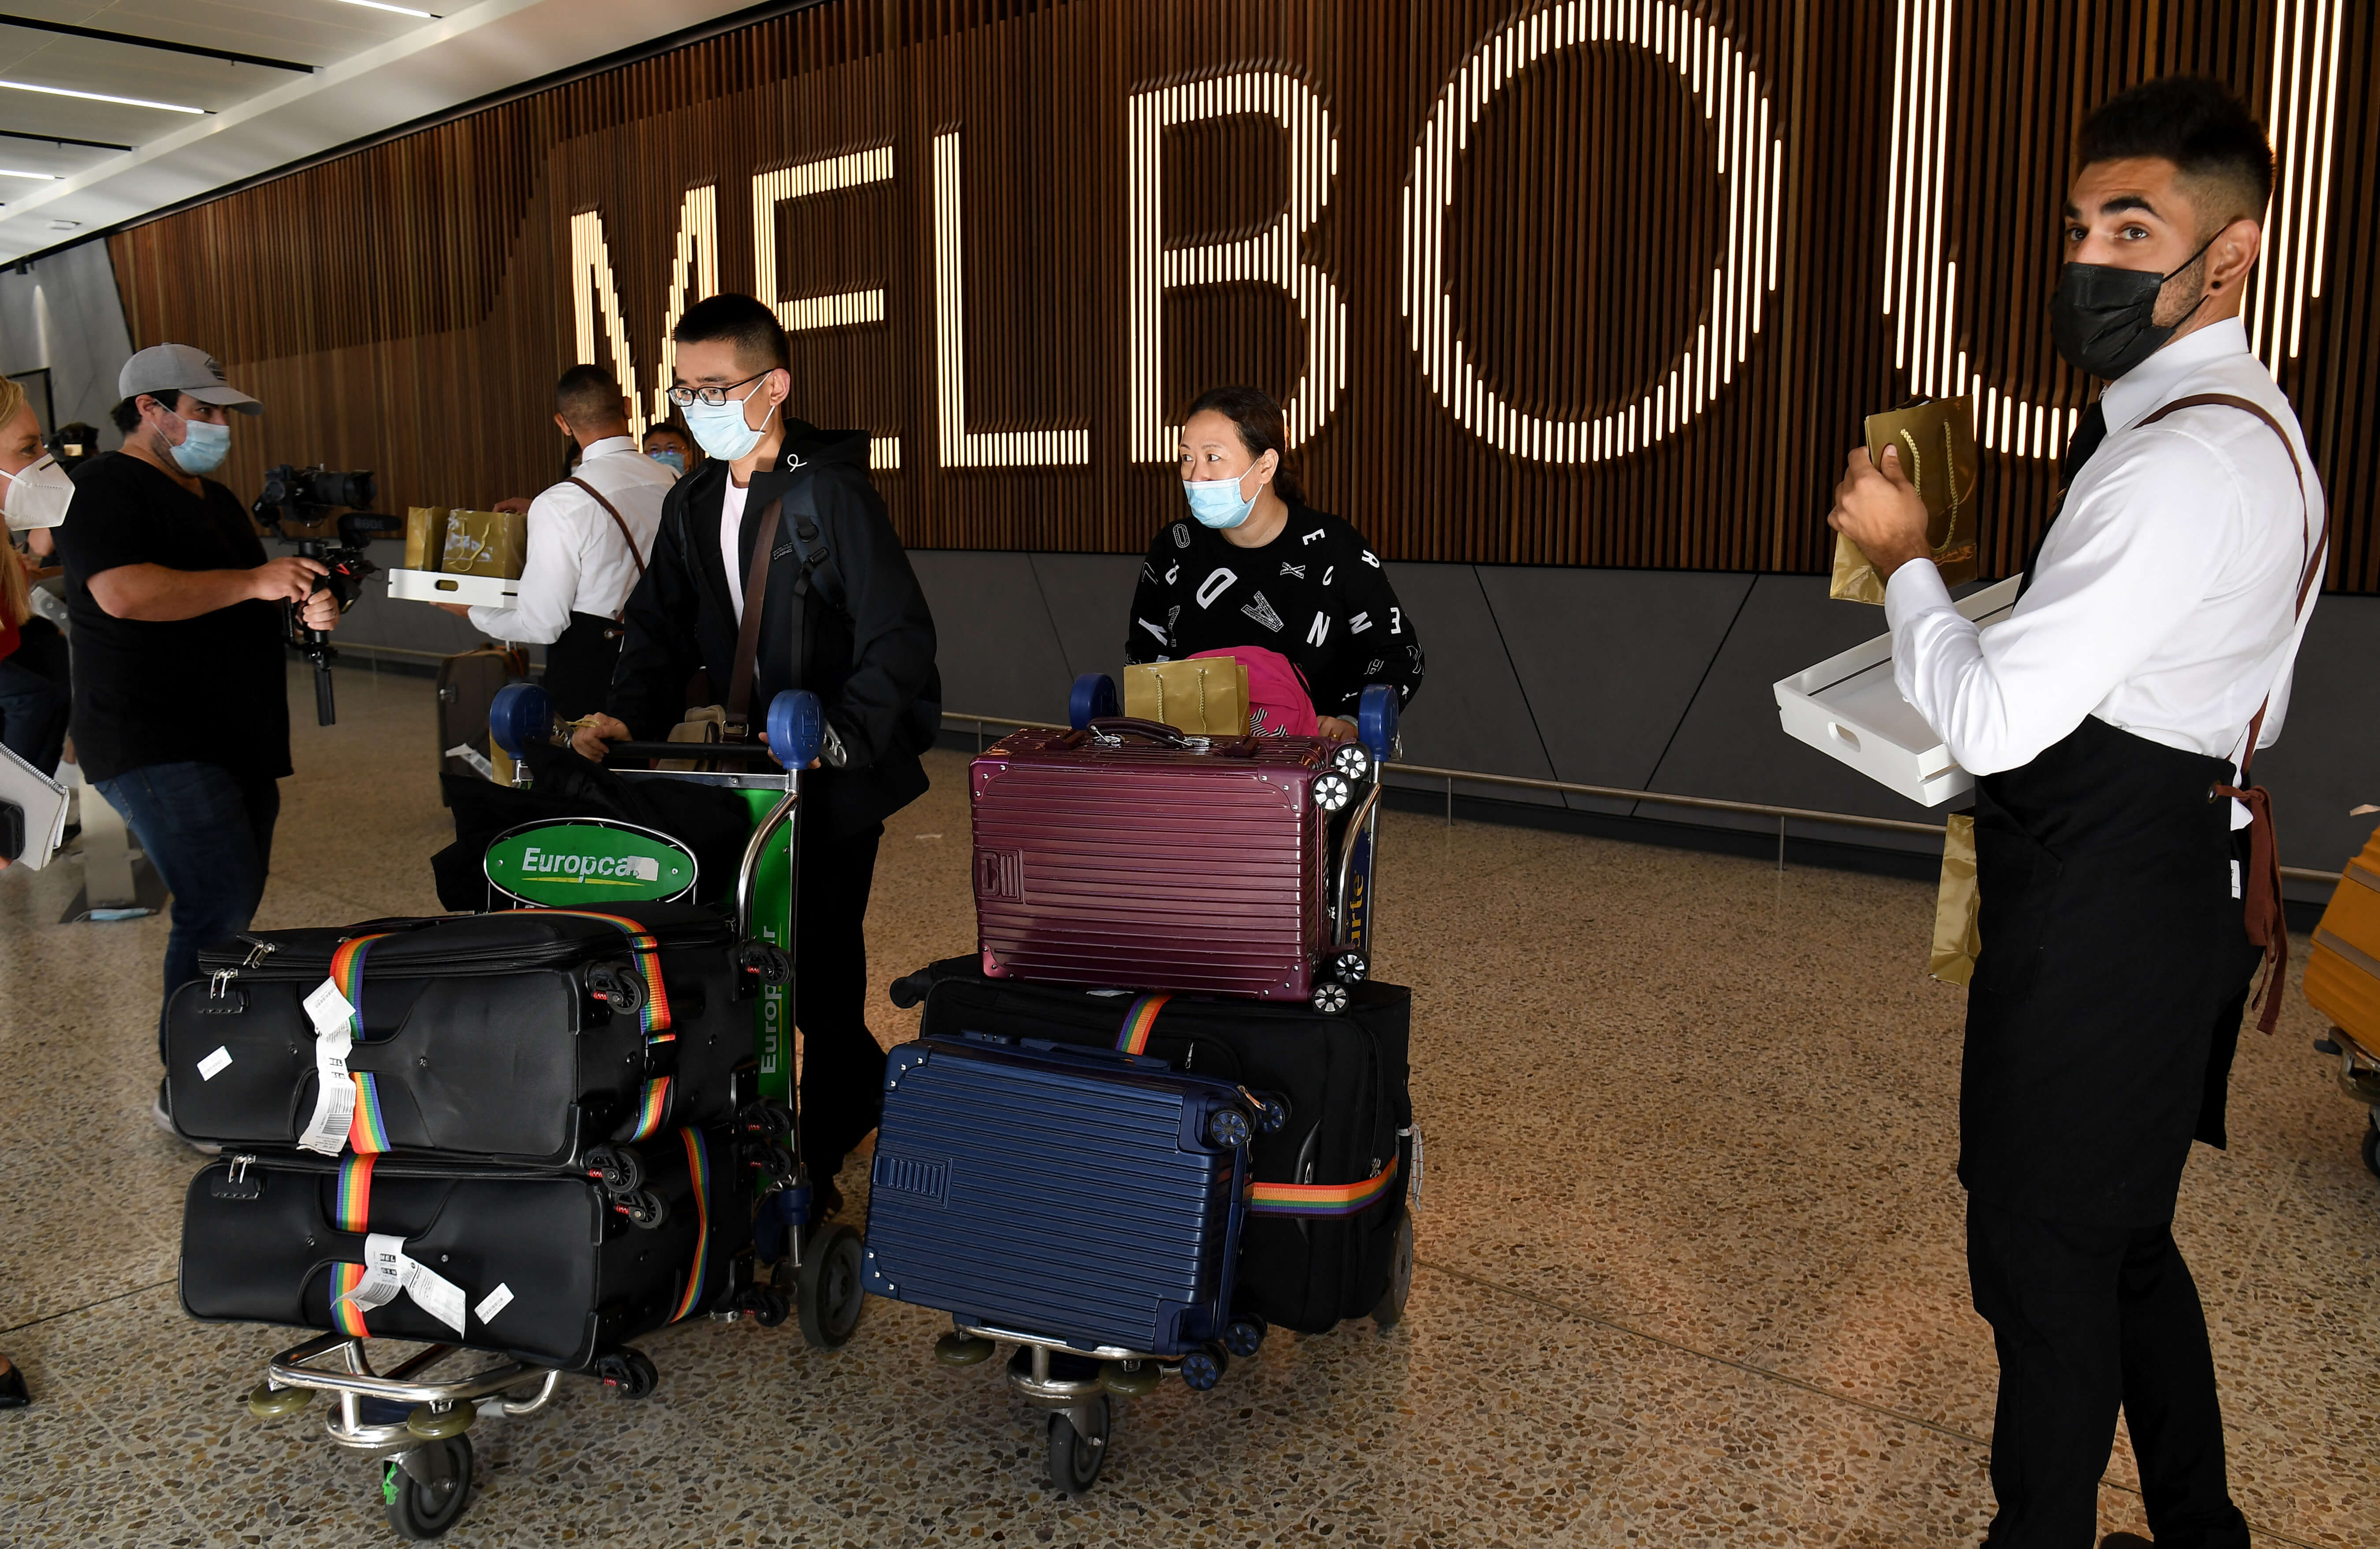 International students from China wary of returning to Australia